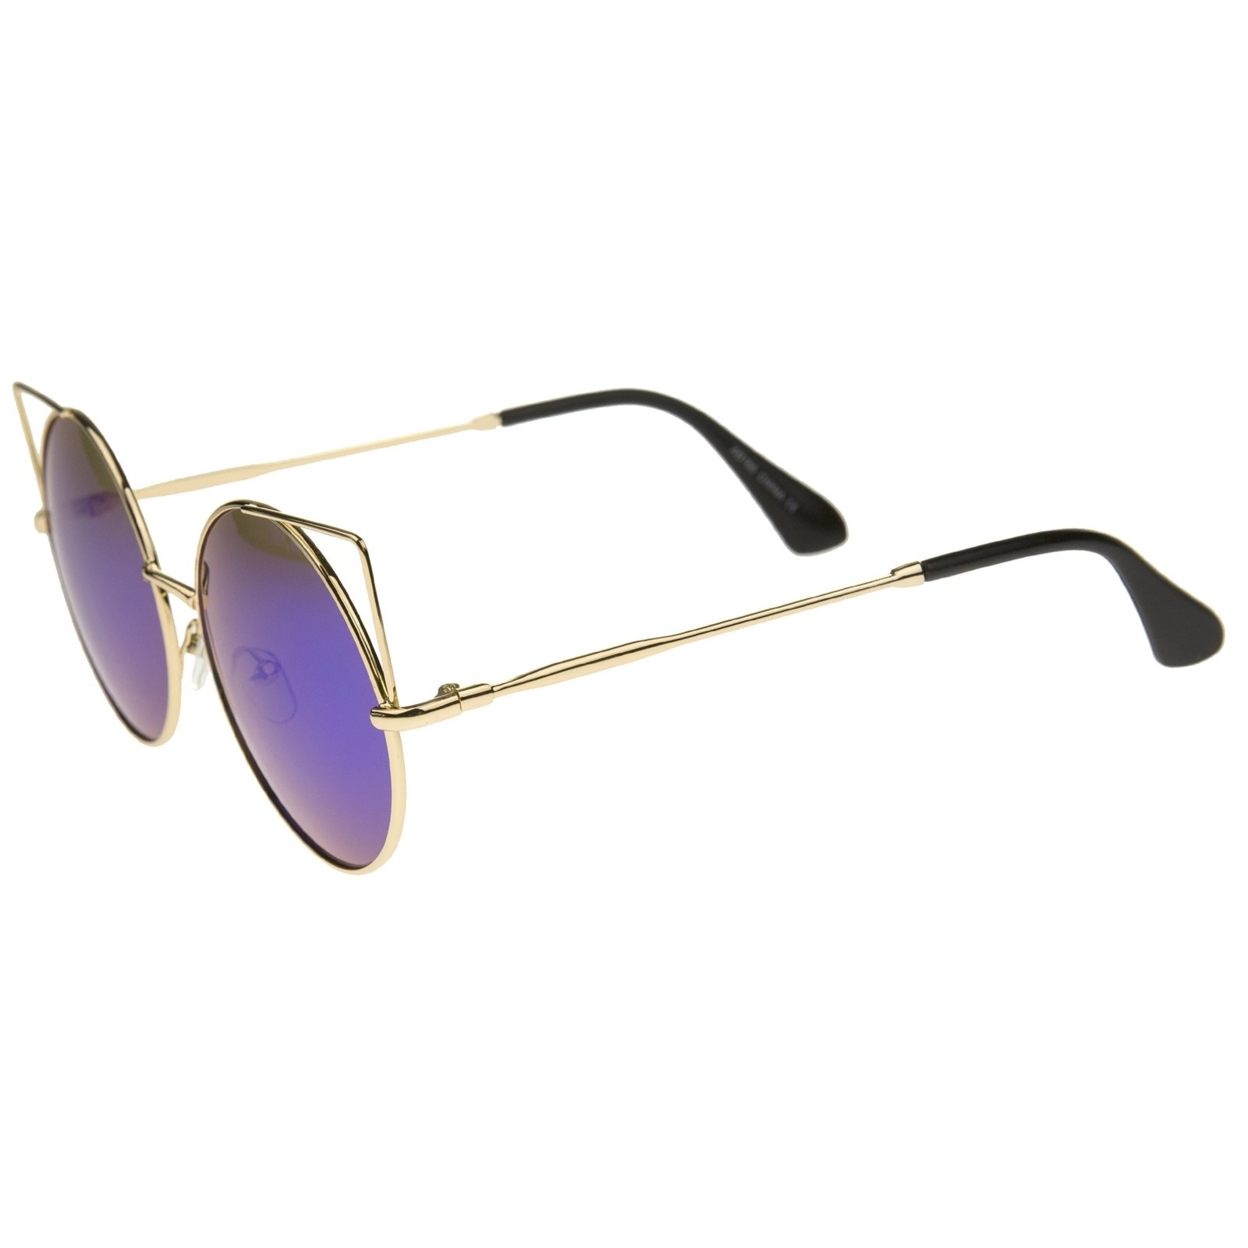 Women's Full Metal Cut Out Mirror Flat Lens Round Cat Eye Sunglasses 55mm - Gold / Green Mirror